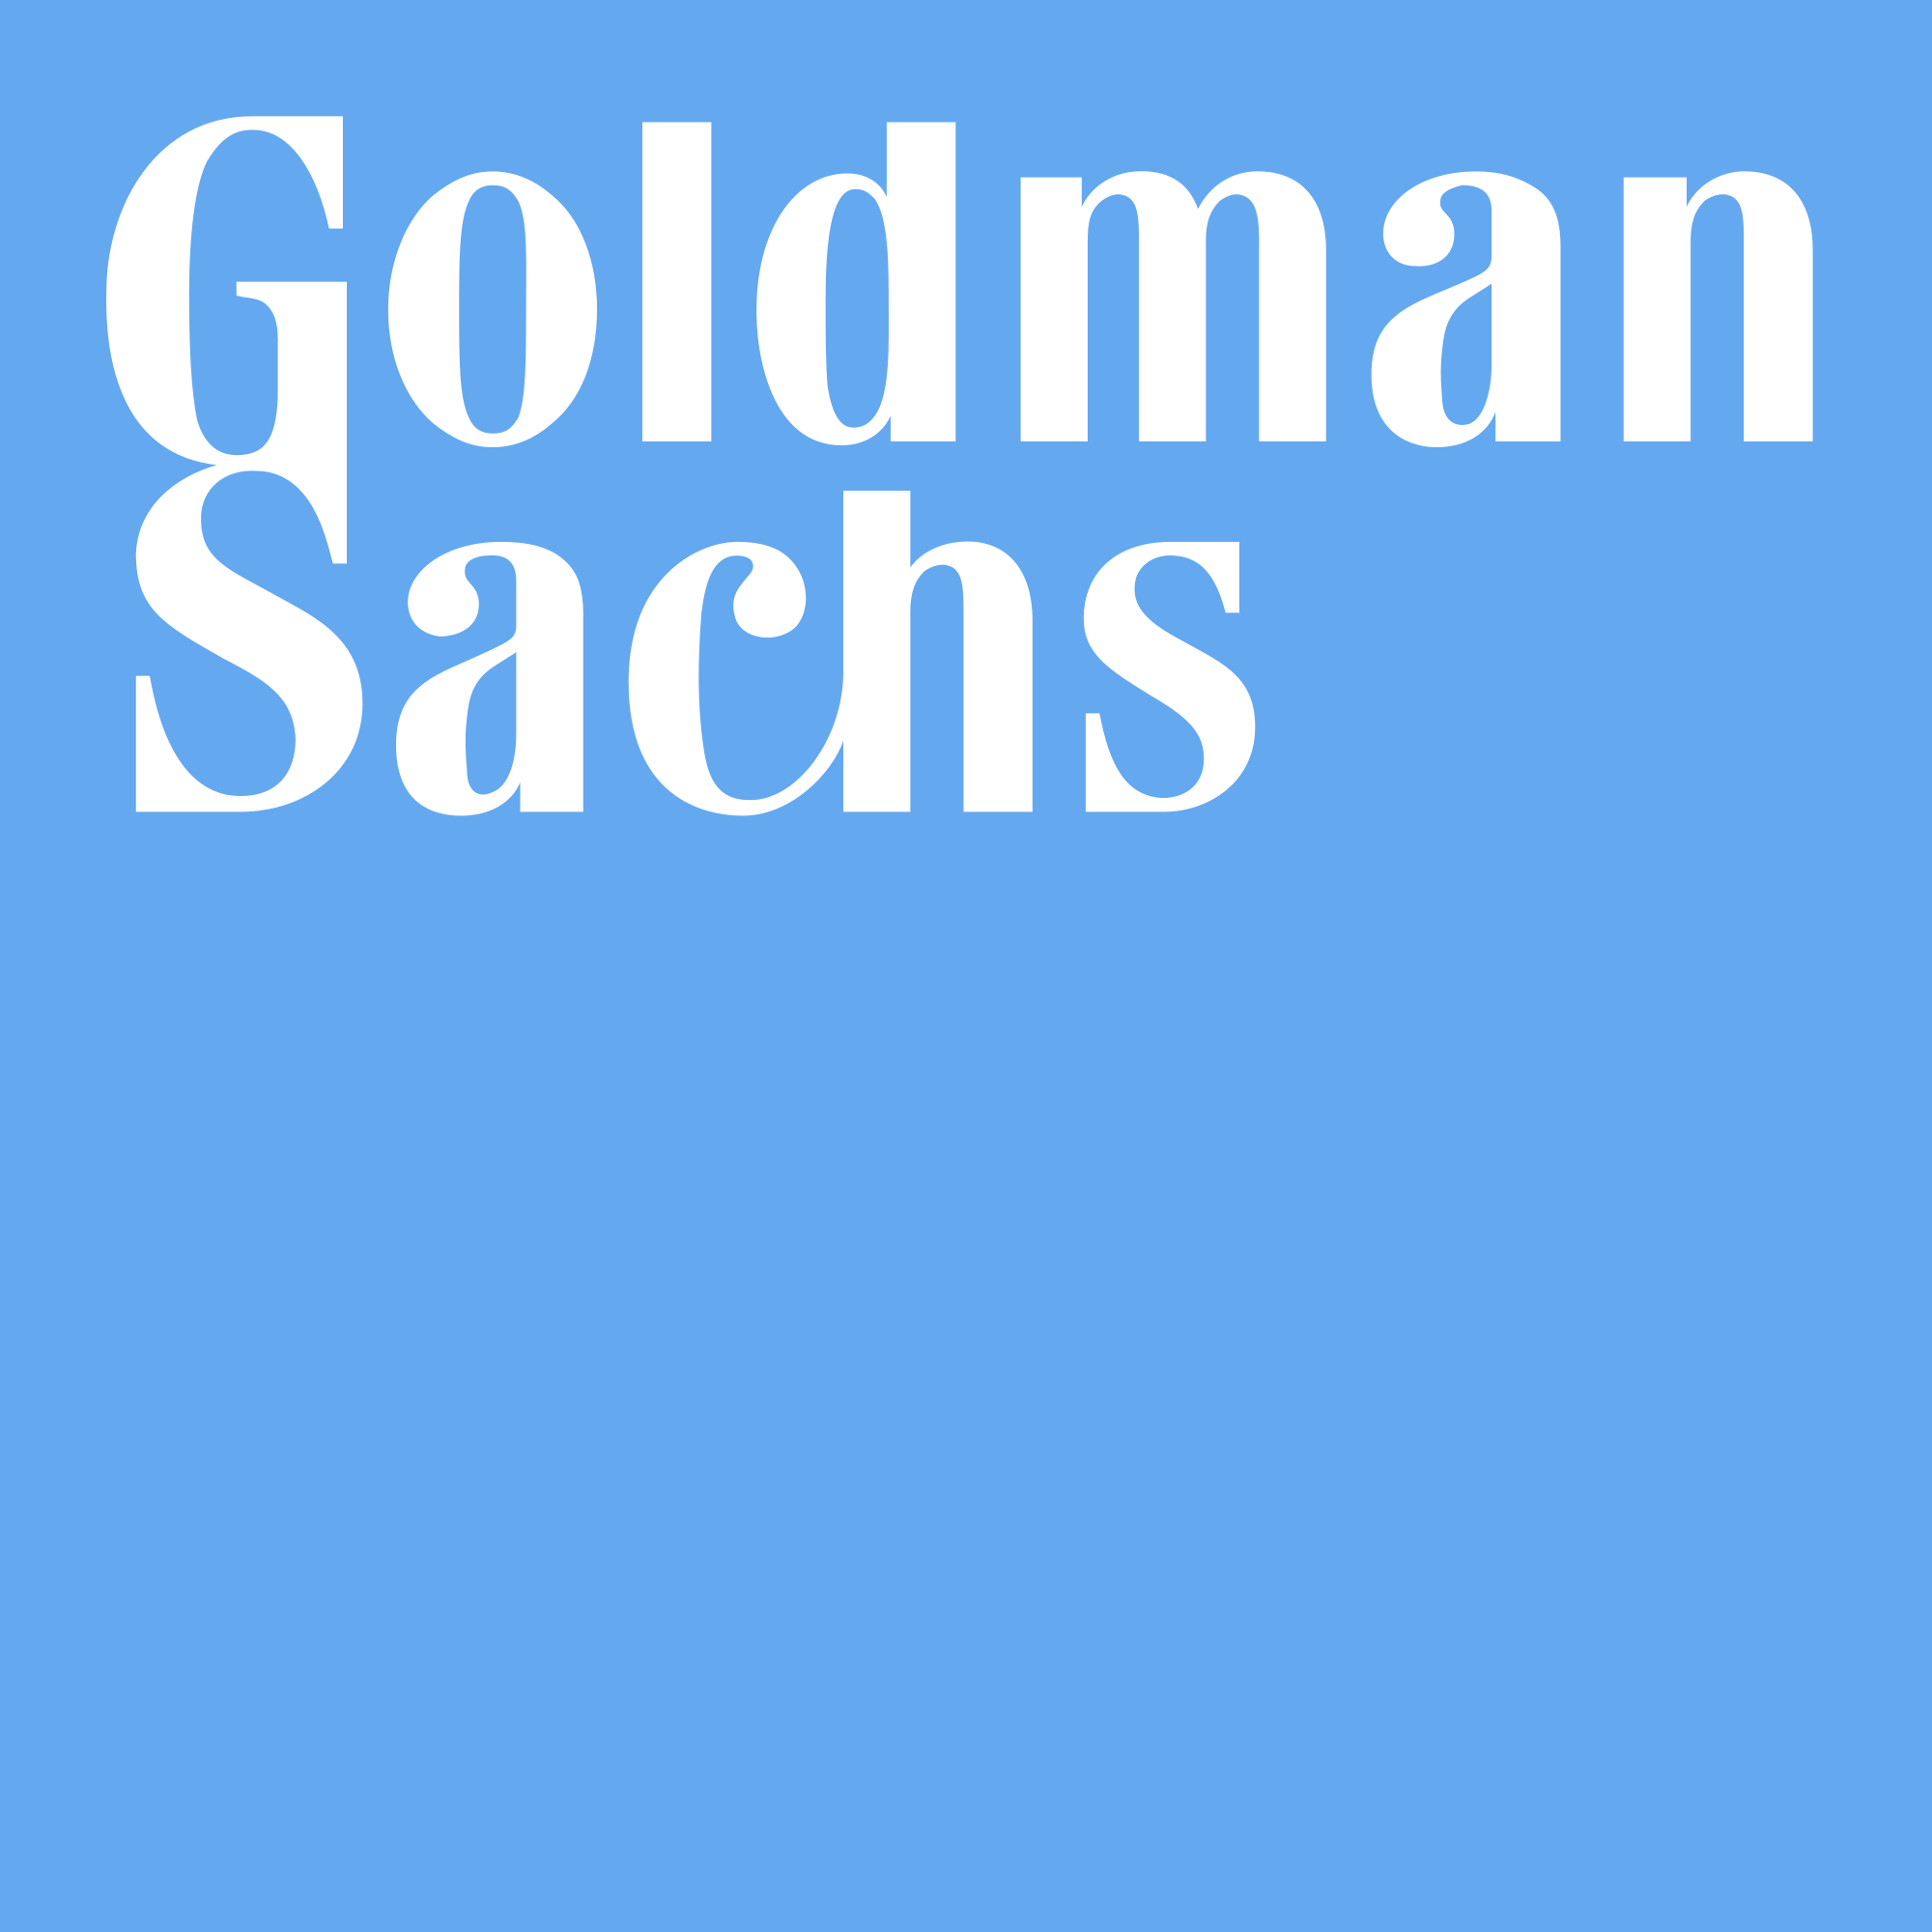 U.S. District Judge Analisa Torres allows gender-bias lawsuit to proceed against Goldman Sachs Group Inc